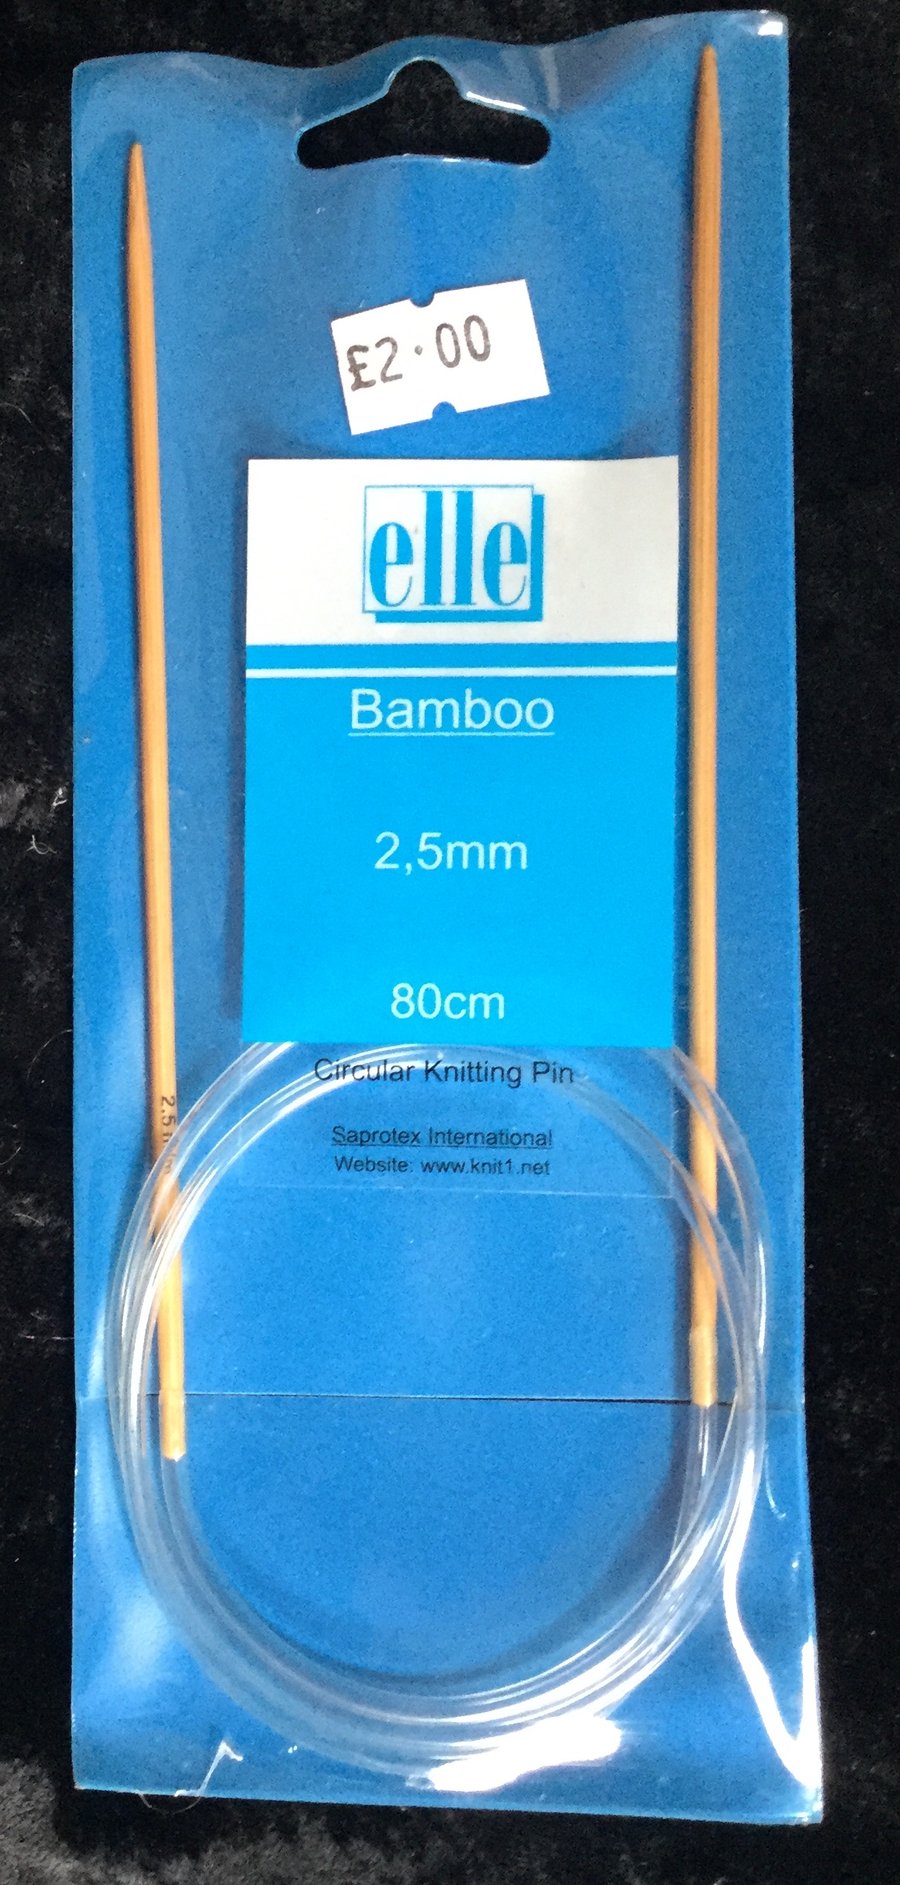 Elle Bamboo Circular Knitting Needles 2mm - 4.5mm US0-US7